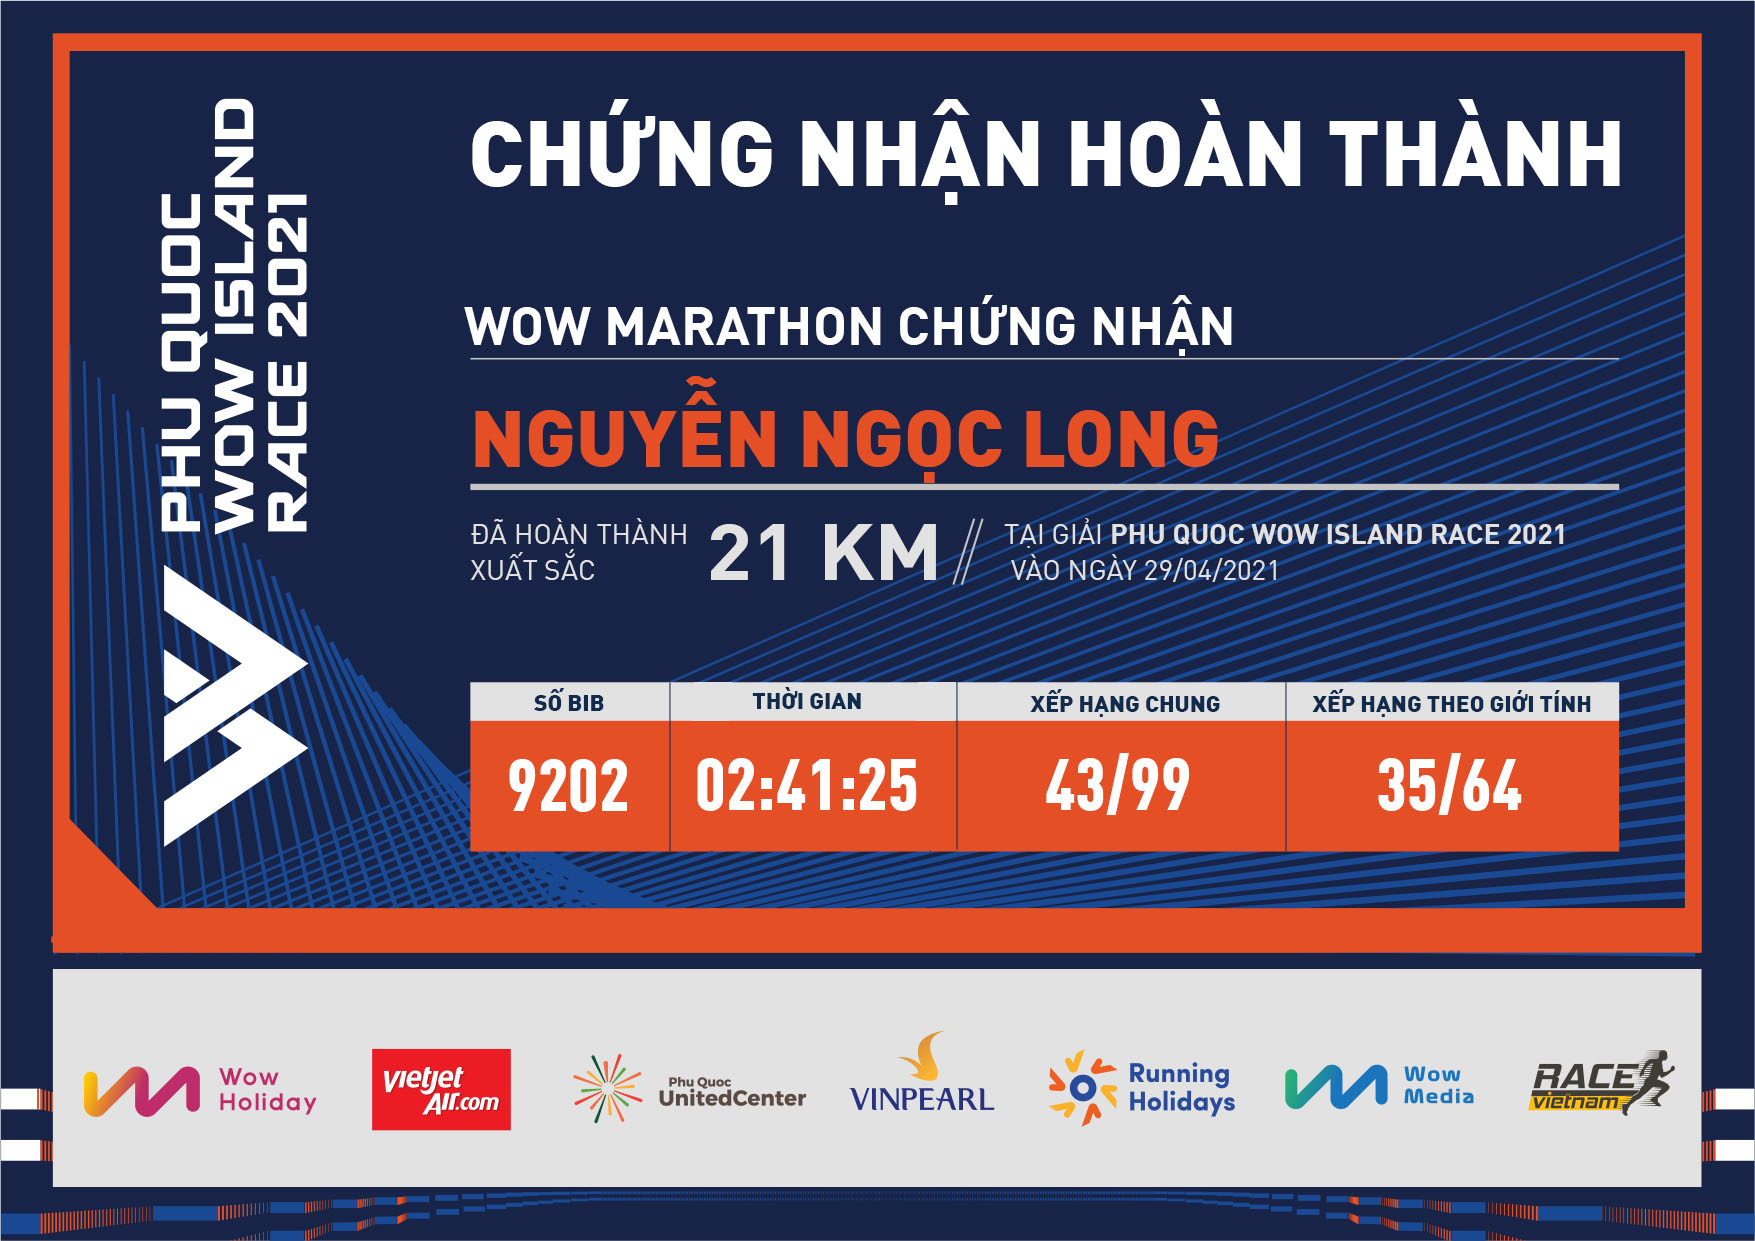 9202 - Nguyễn Ngọc Long